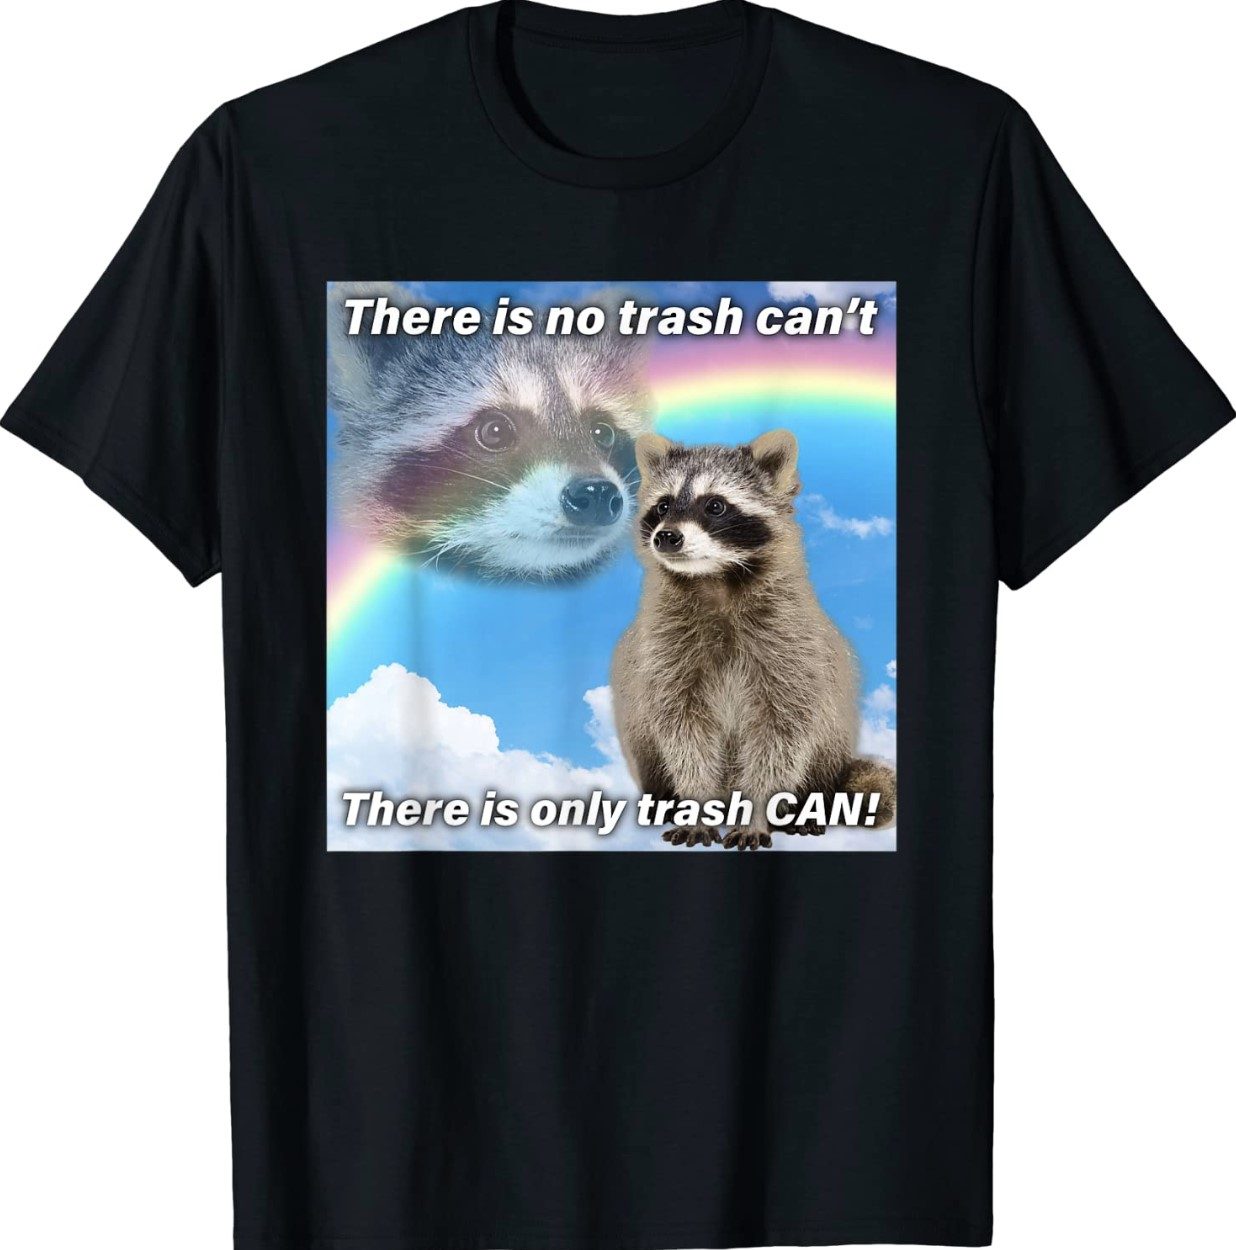 Trash Can Trash Can't Raccoon Garbage Gift TShirt - ReviewsTees